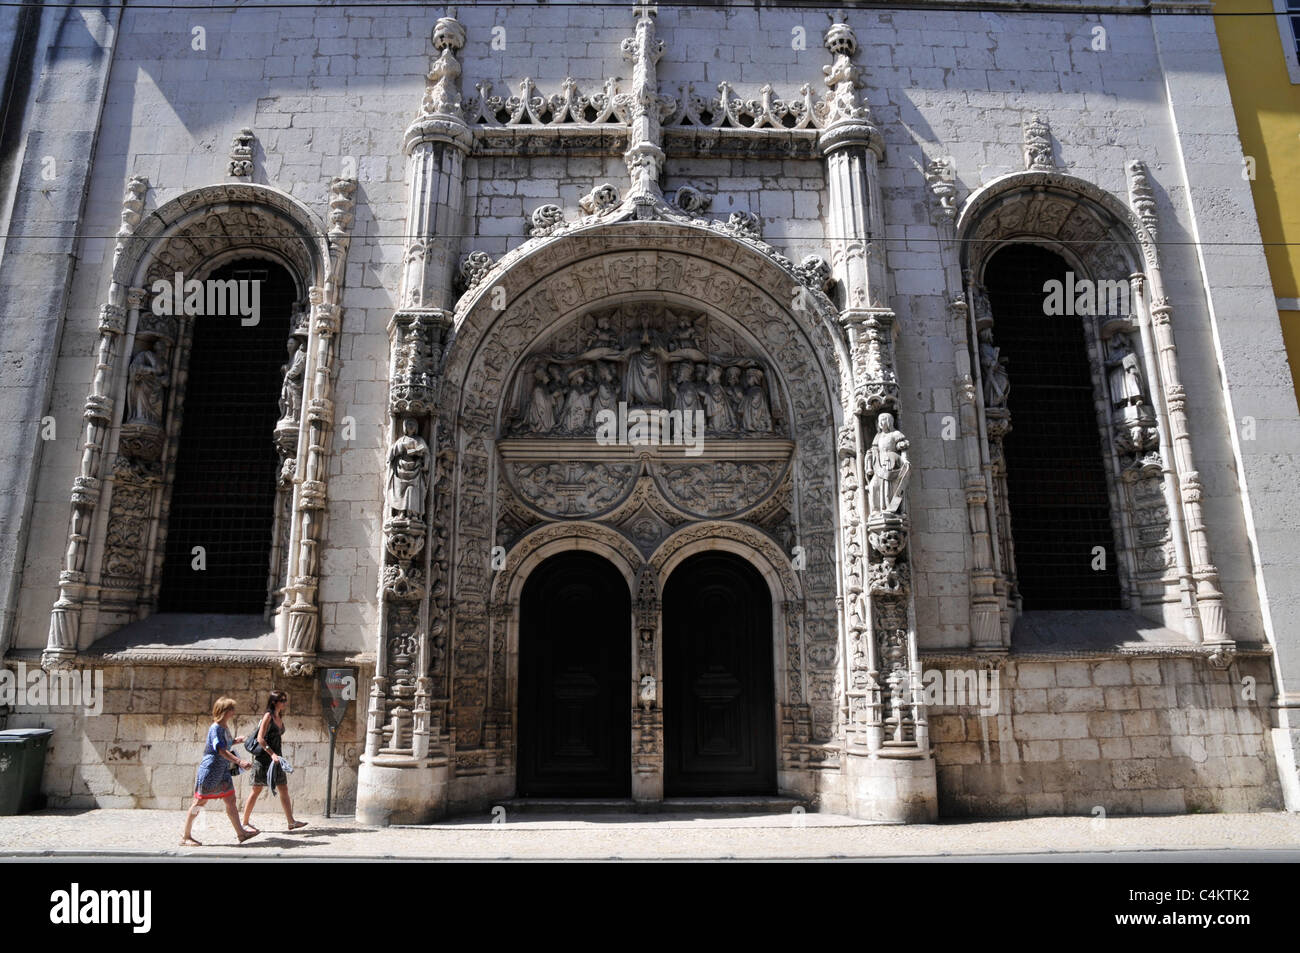 Portal de la iglesia de Nossa Senhora da Conceição Velha, en el centro de Lisboa, Portugal, con dos mujeres turistas que pasan por ahí. Foto de stock